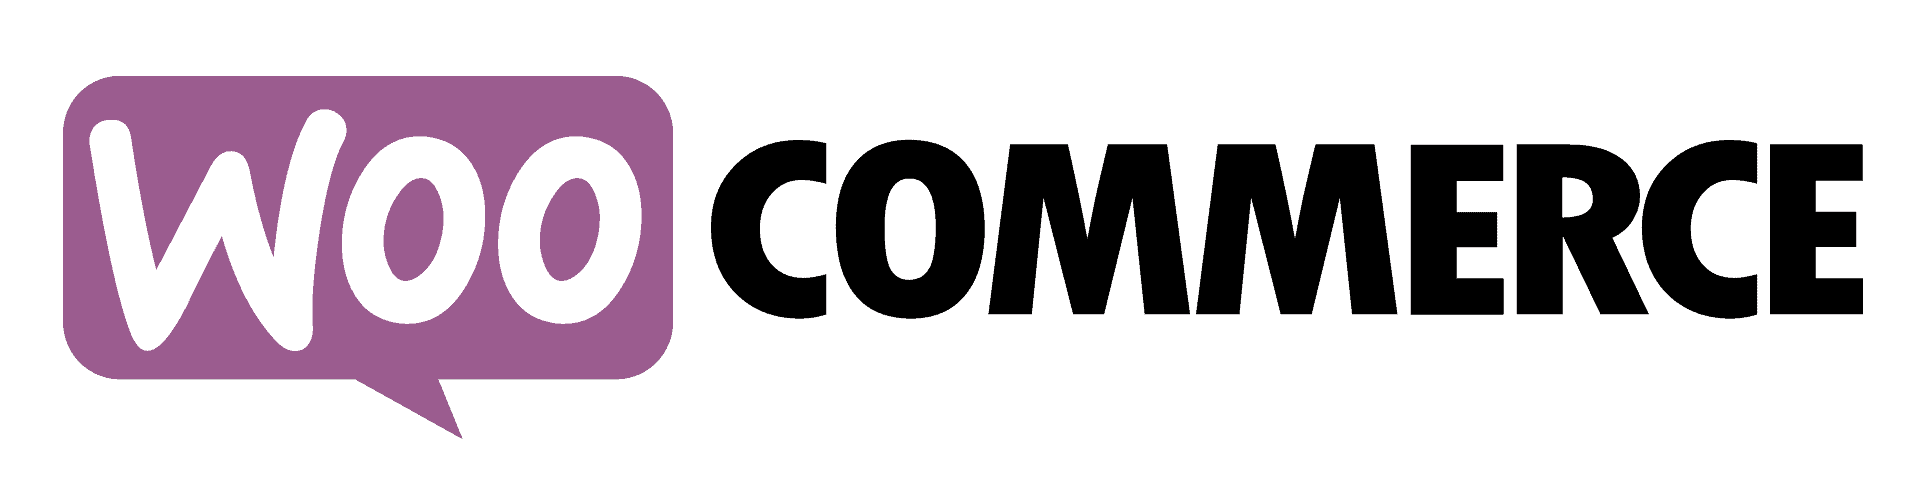 Woocommerce logo transparent